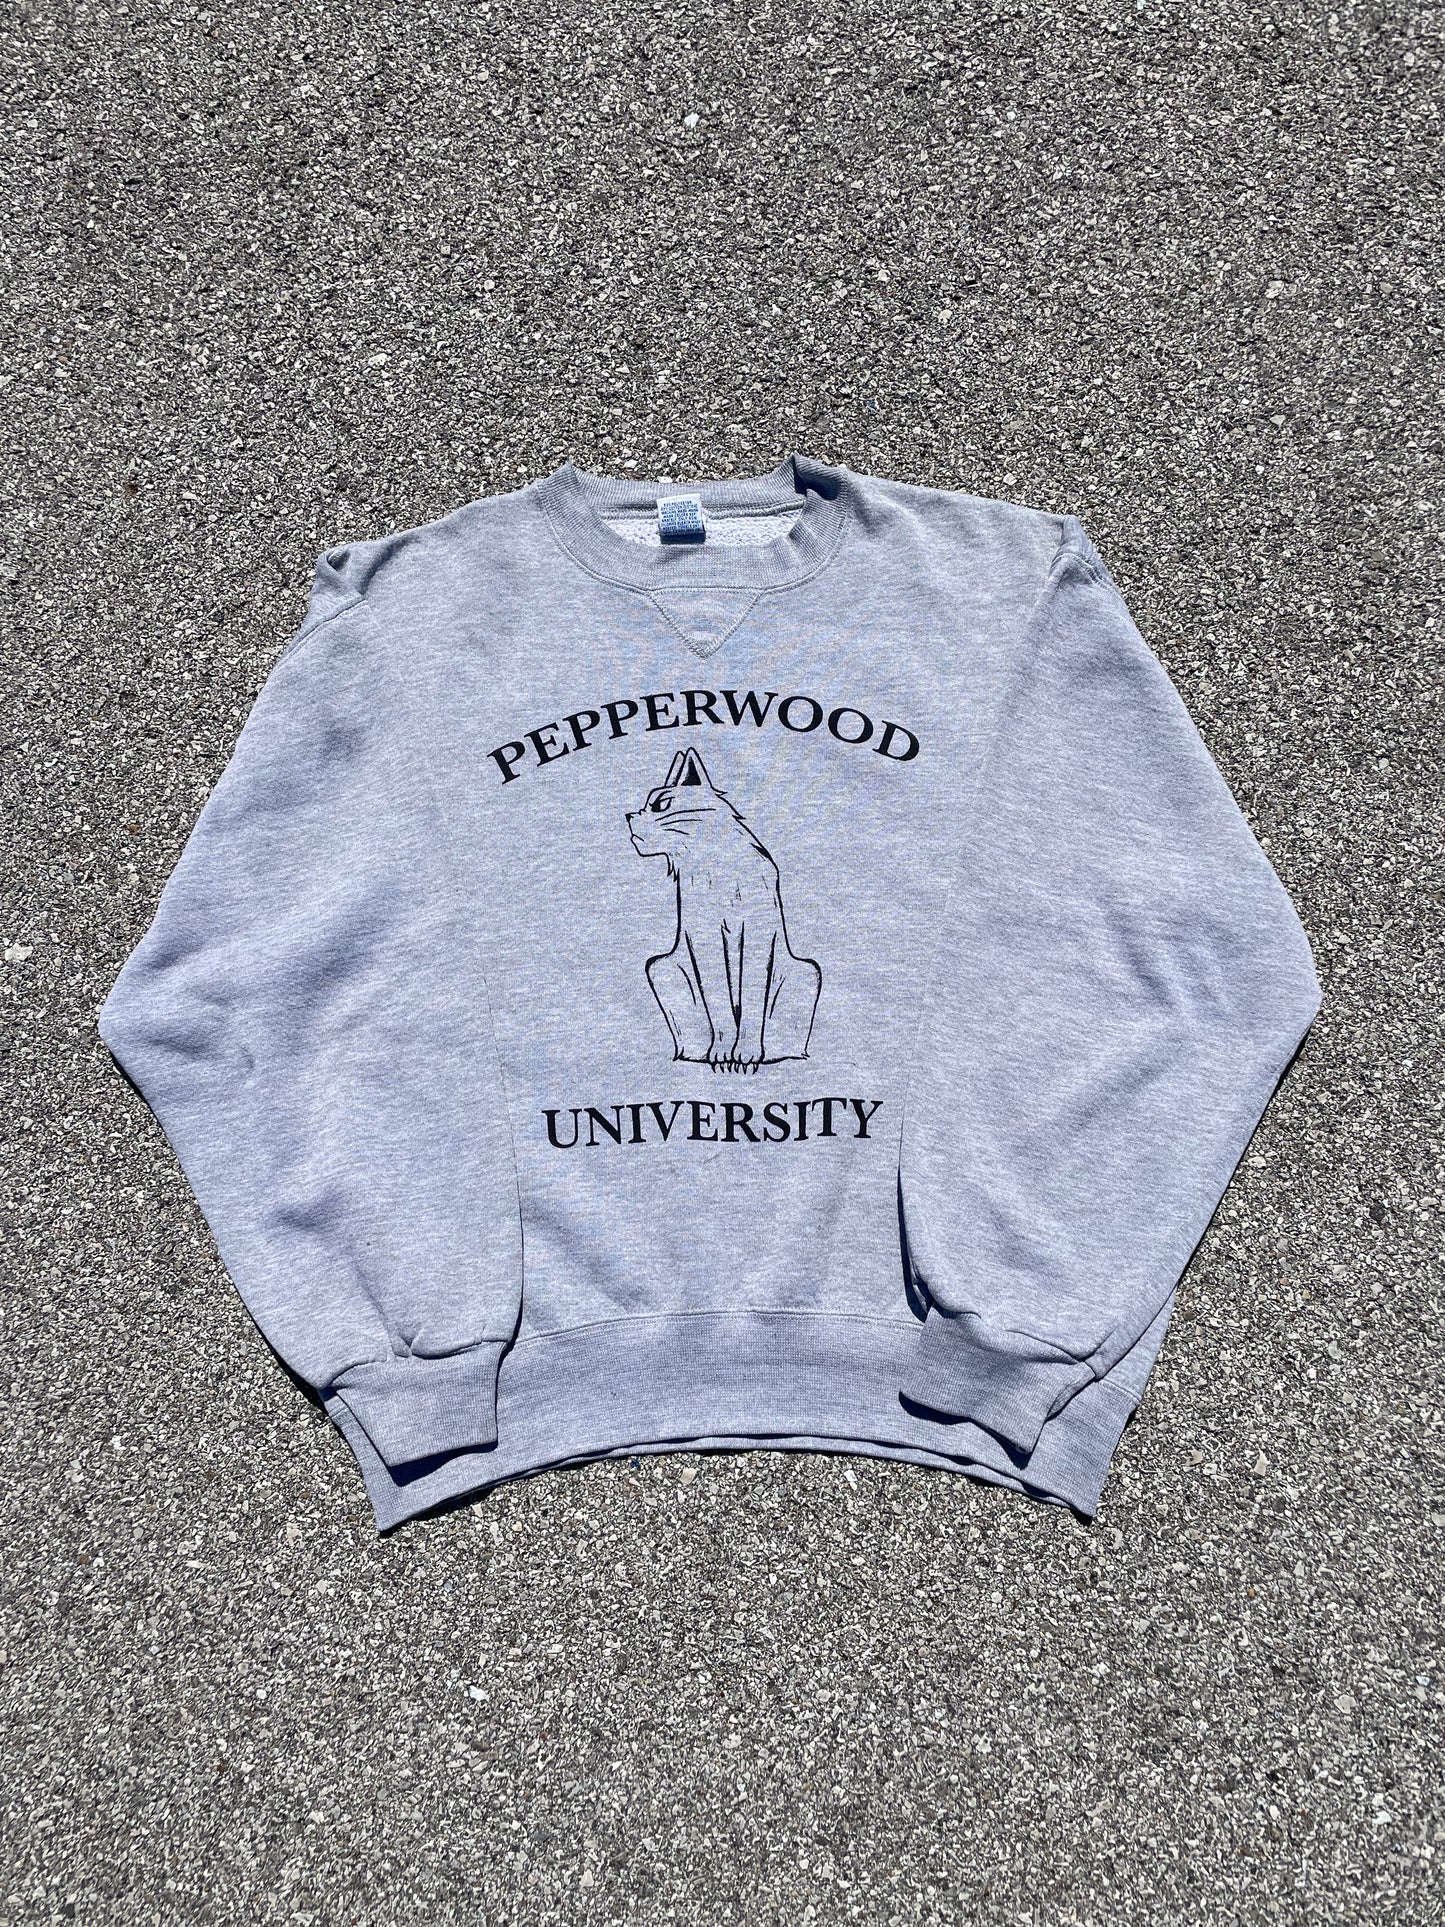 Pepperwood University - Gray